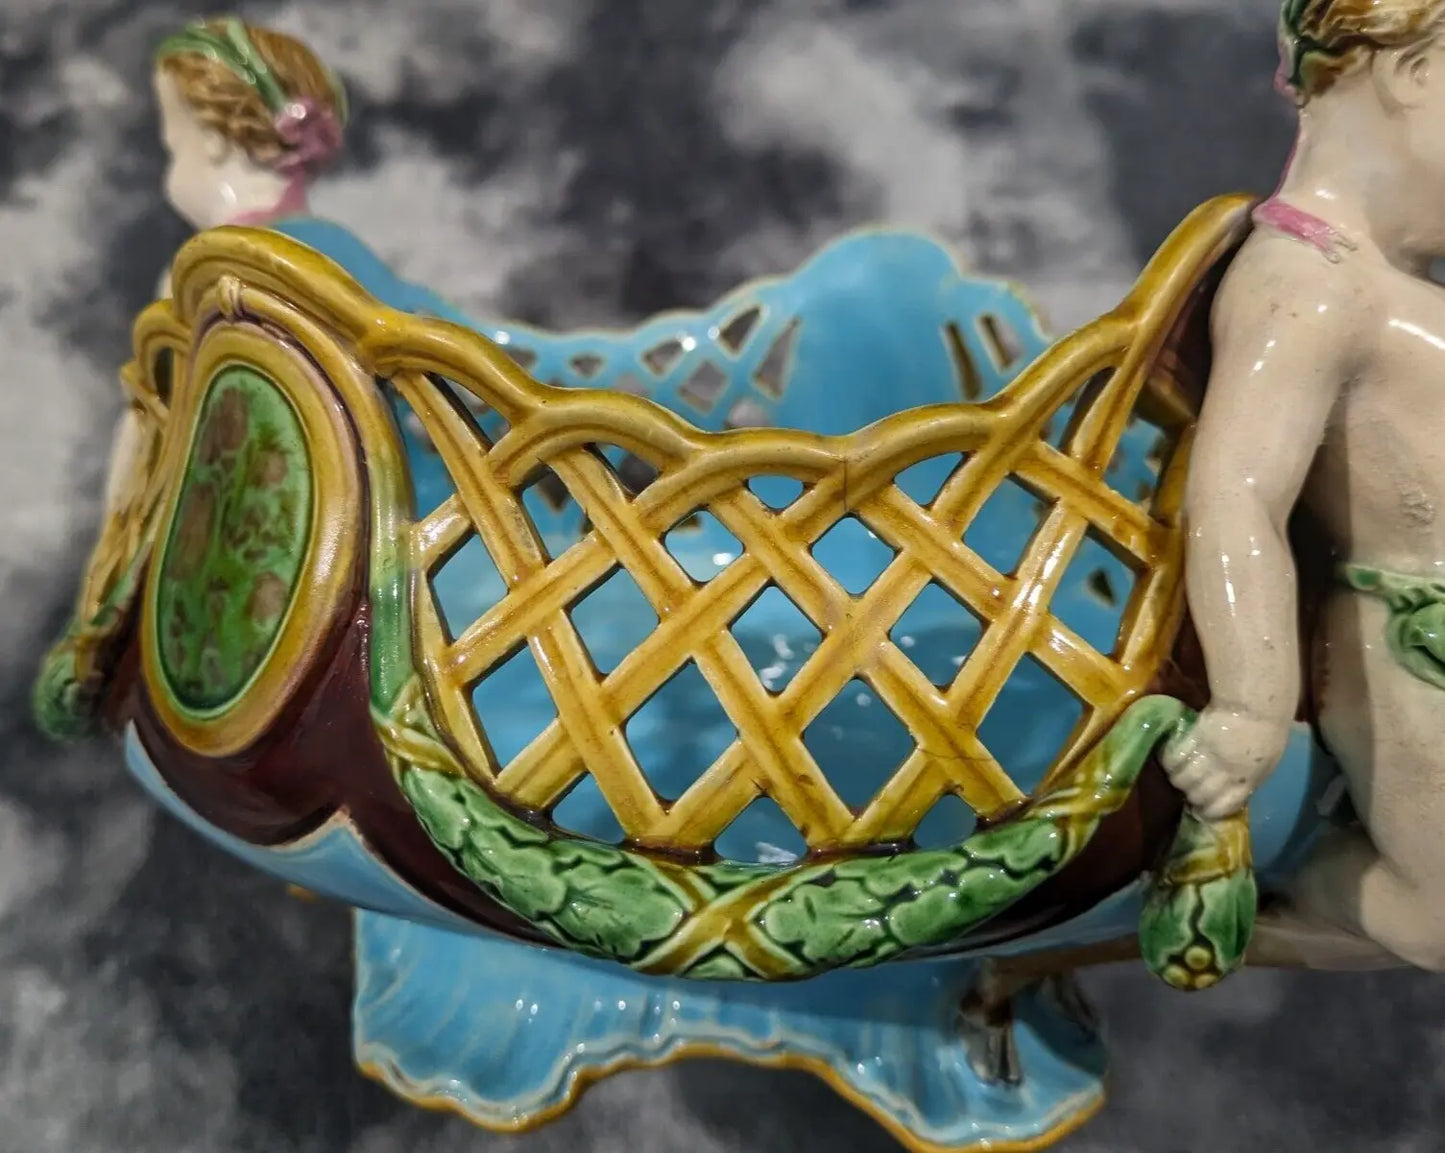 Rare Mintons Majolica Carrier-Belleuse Lattice Basket Faun 19th Century Antique Ceramic